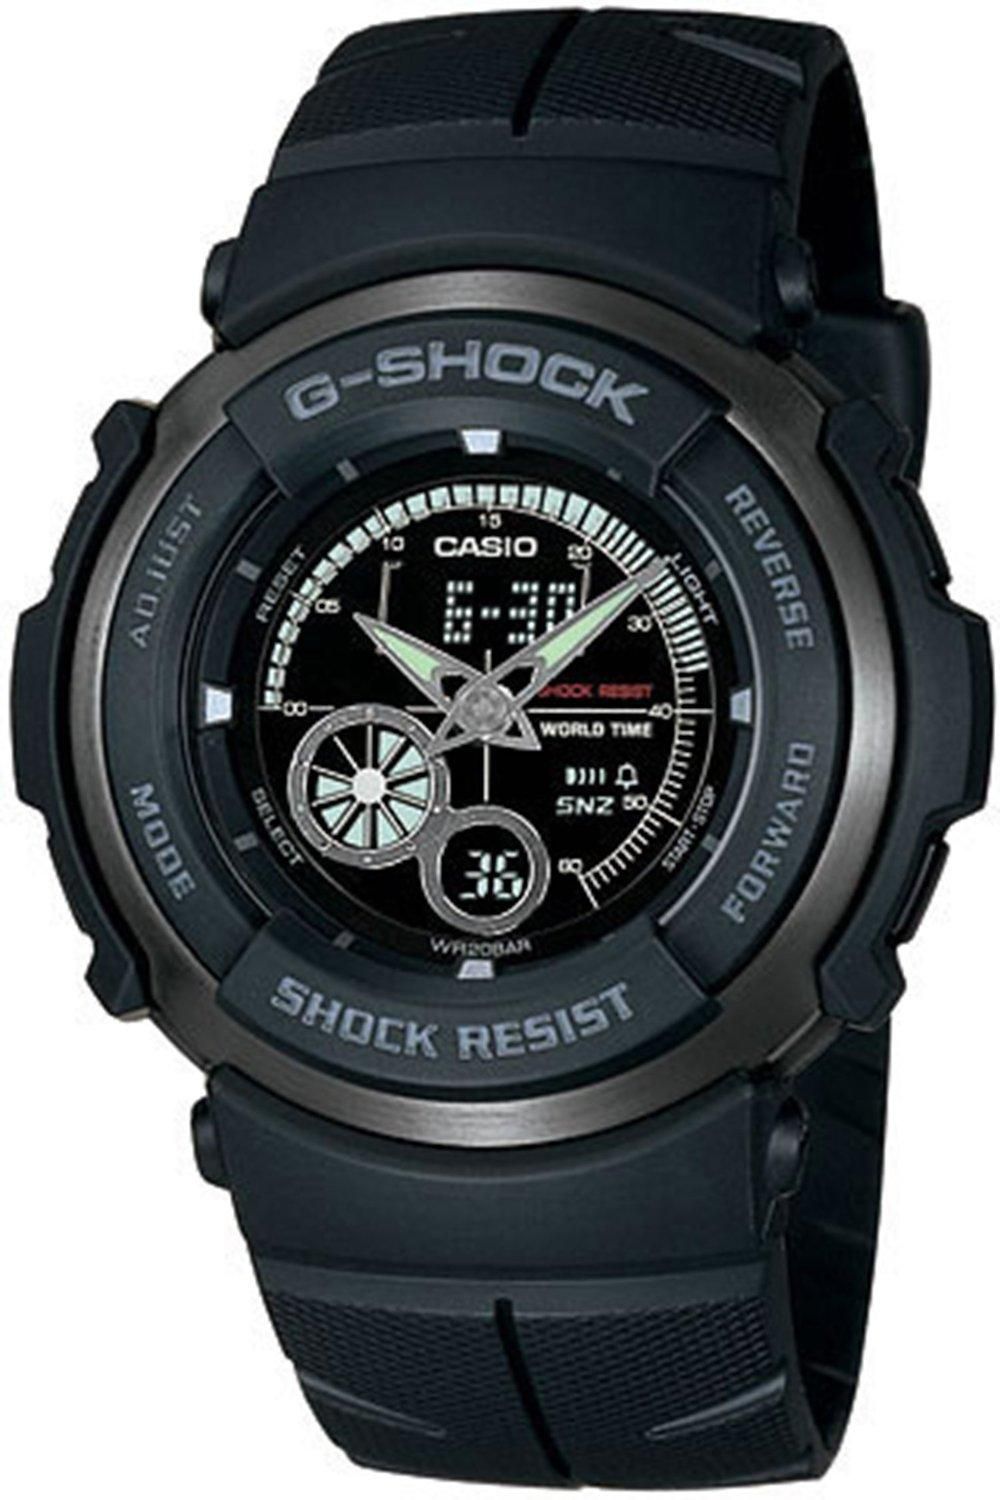 Casio G-Shock G-301B-1A Watch Black